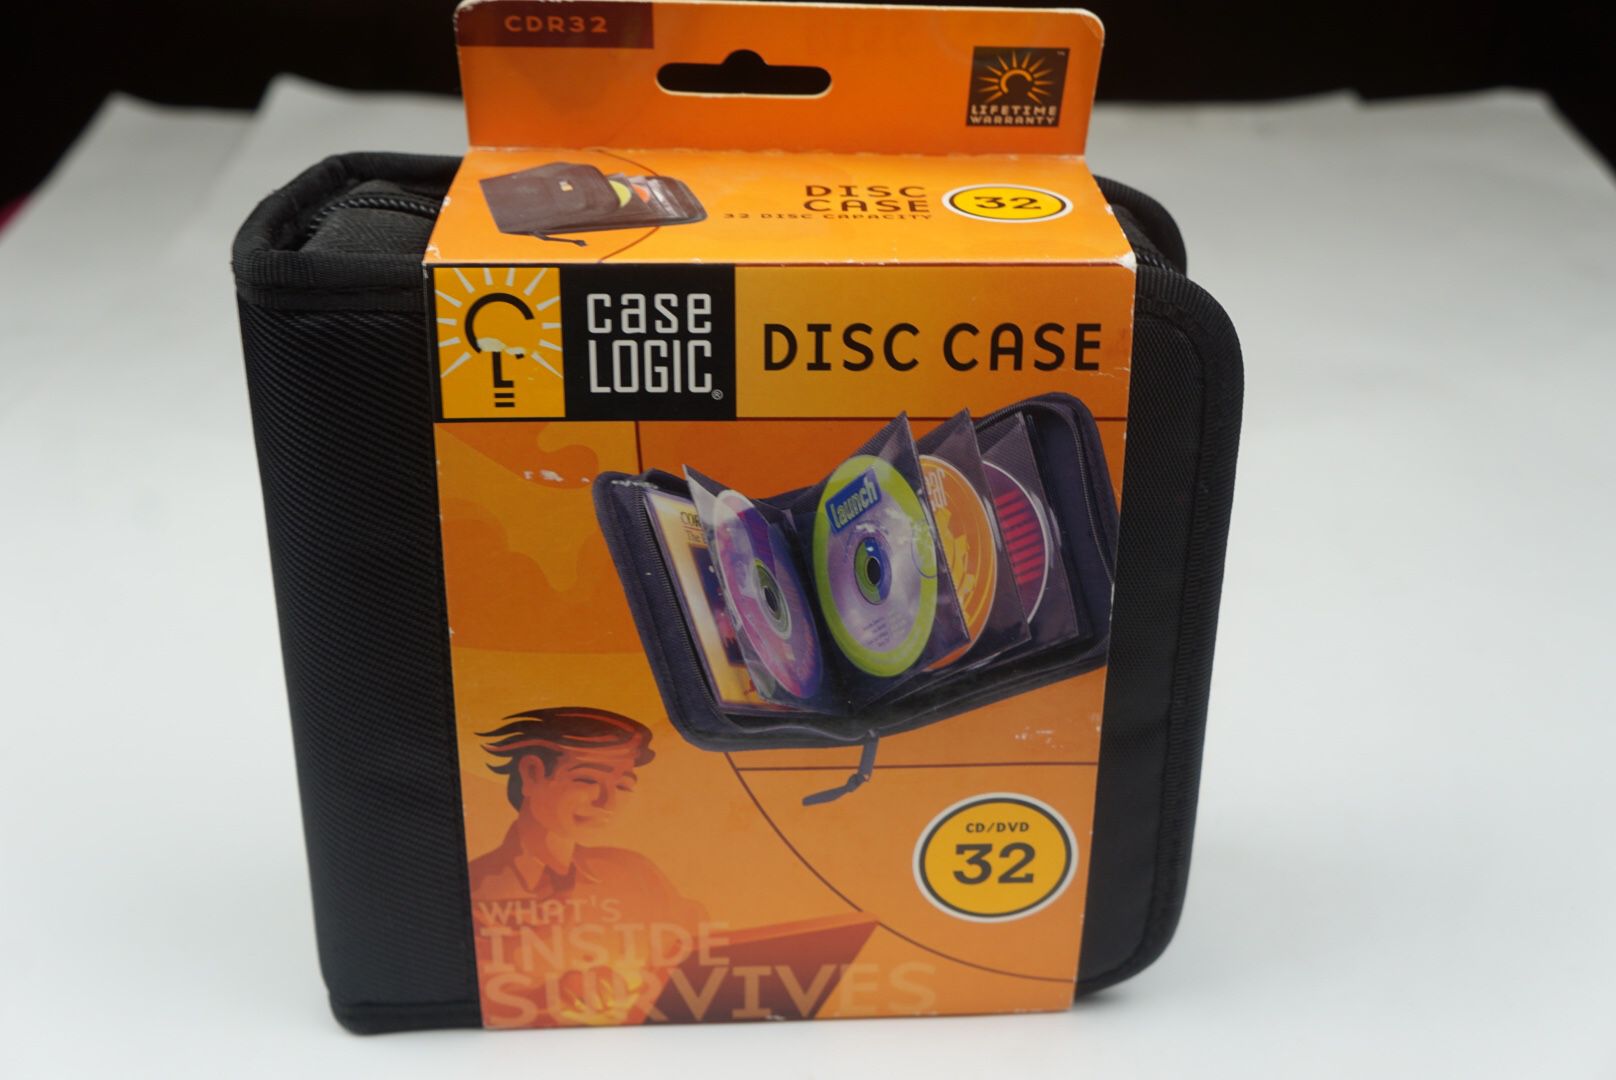 Case Logic Disc Carrying Case CD / DVD 32. CDR32